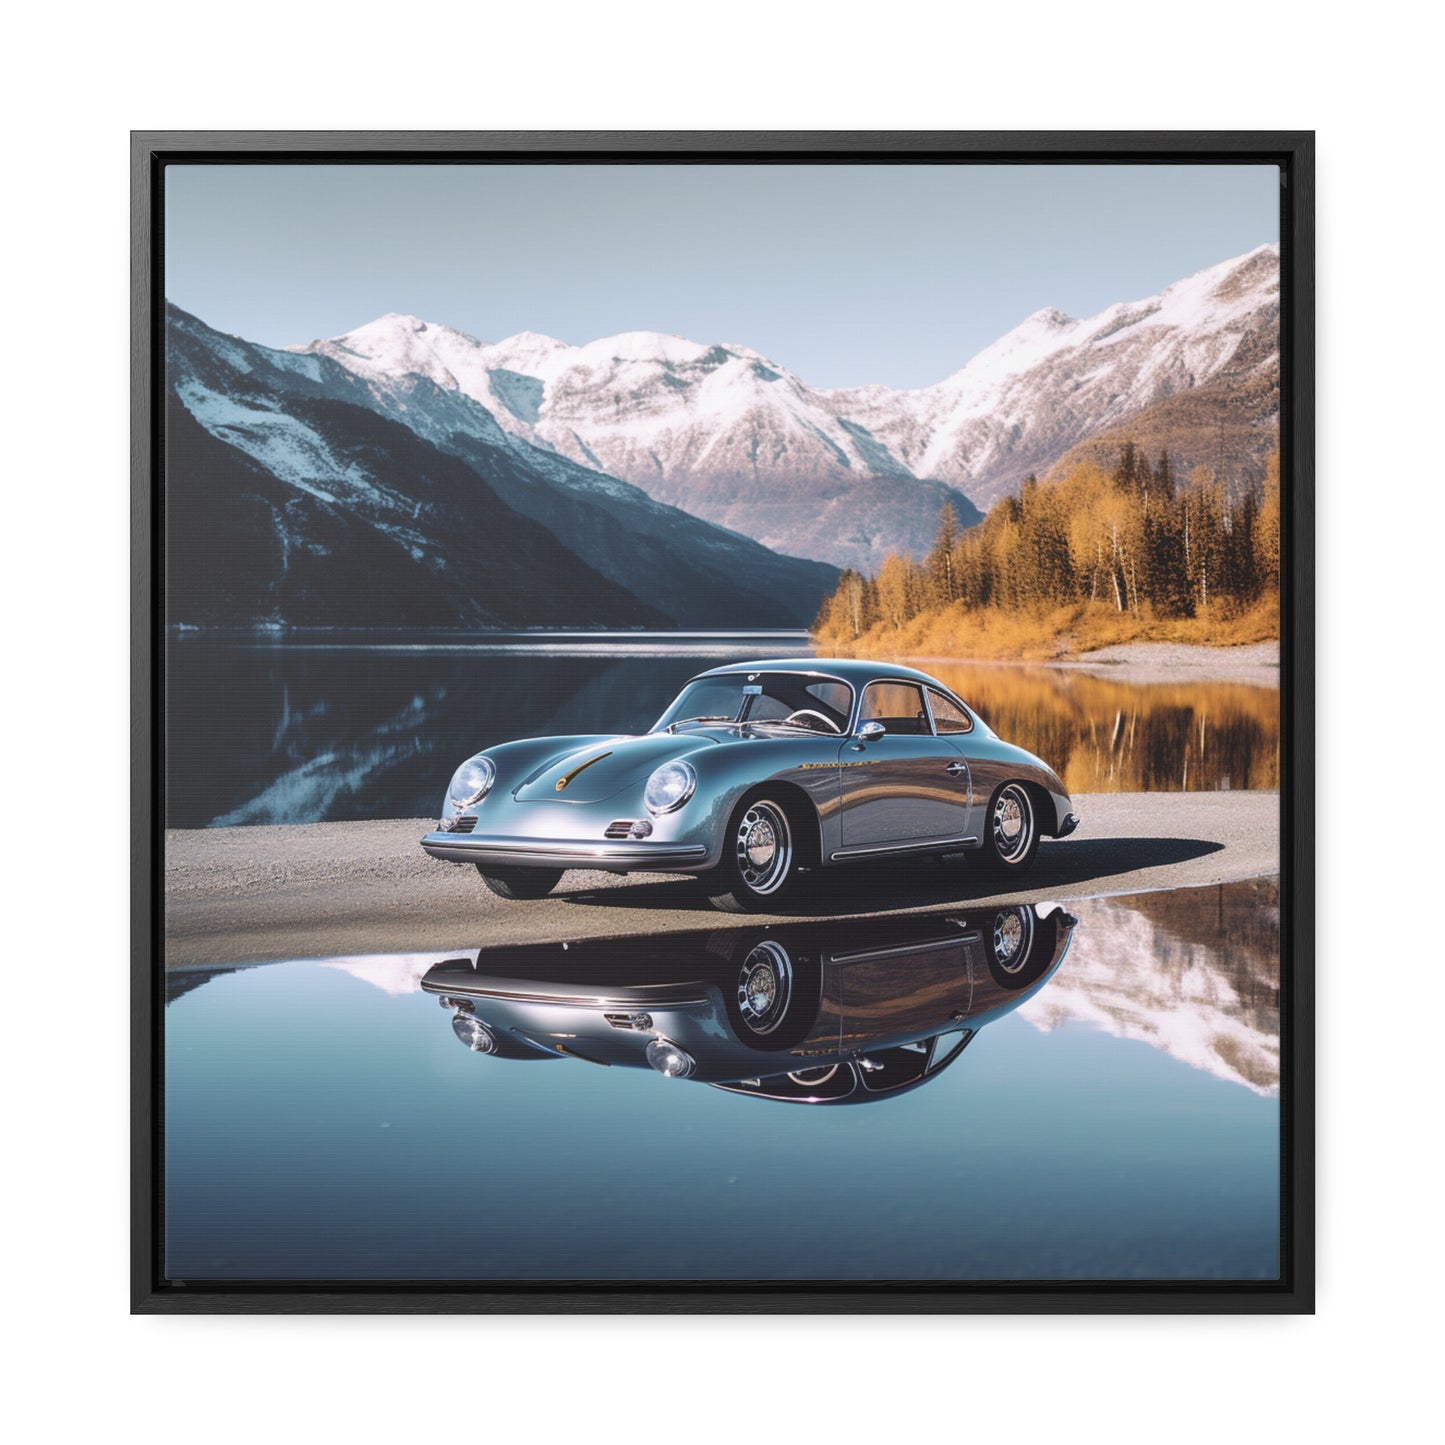 Gallery Canvas Wraps, Square Frame Porsche Lake 1